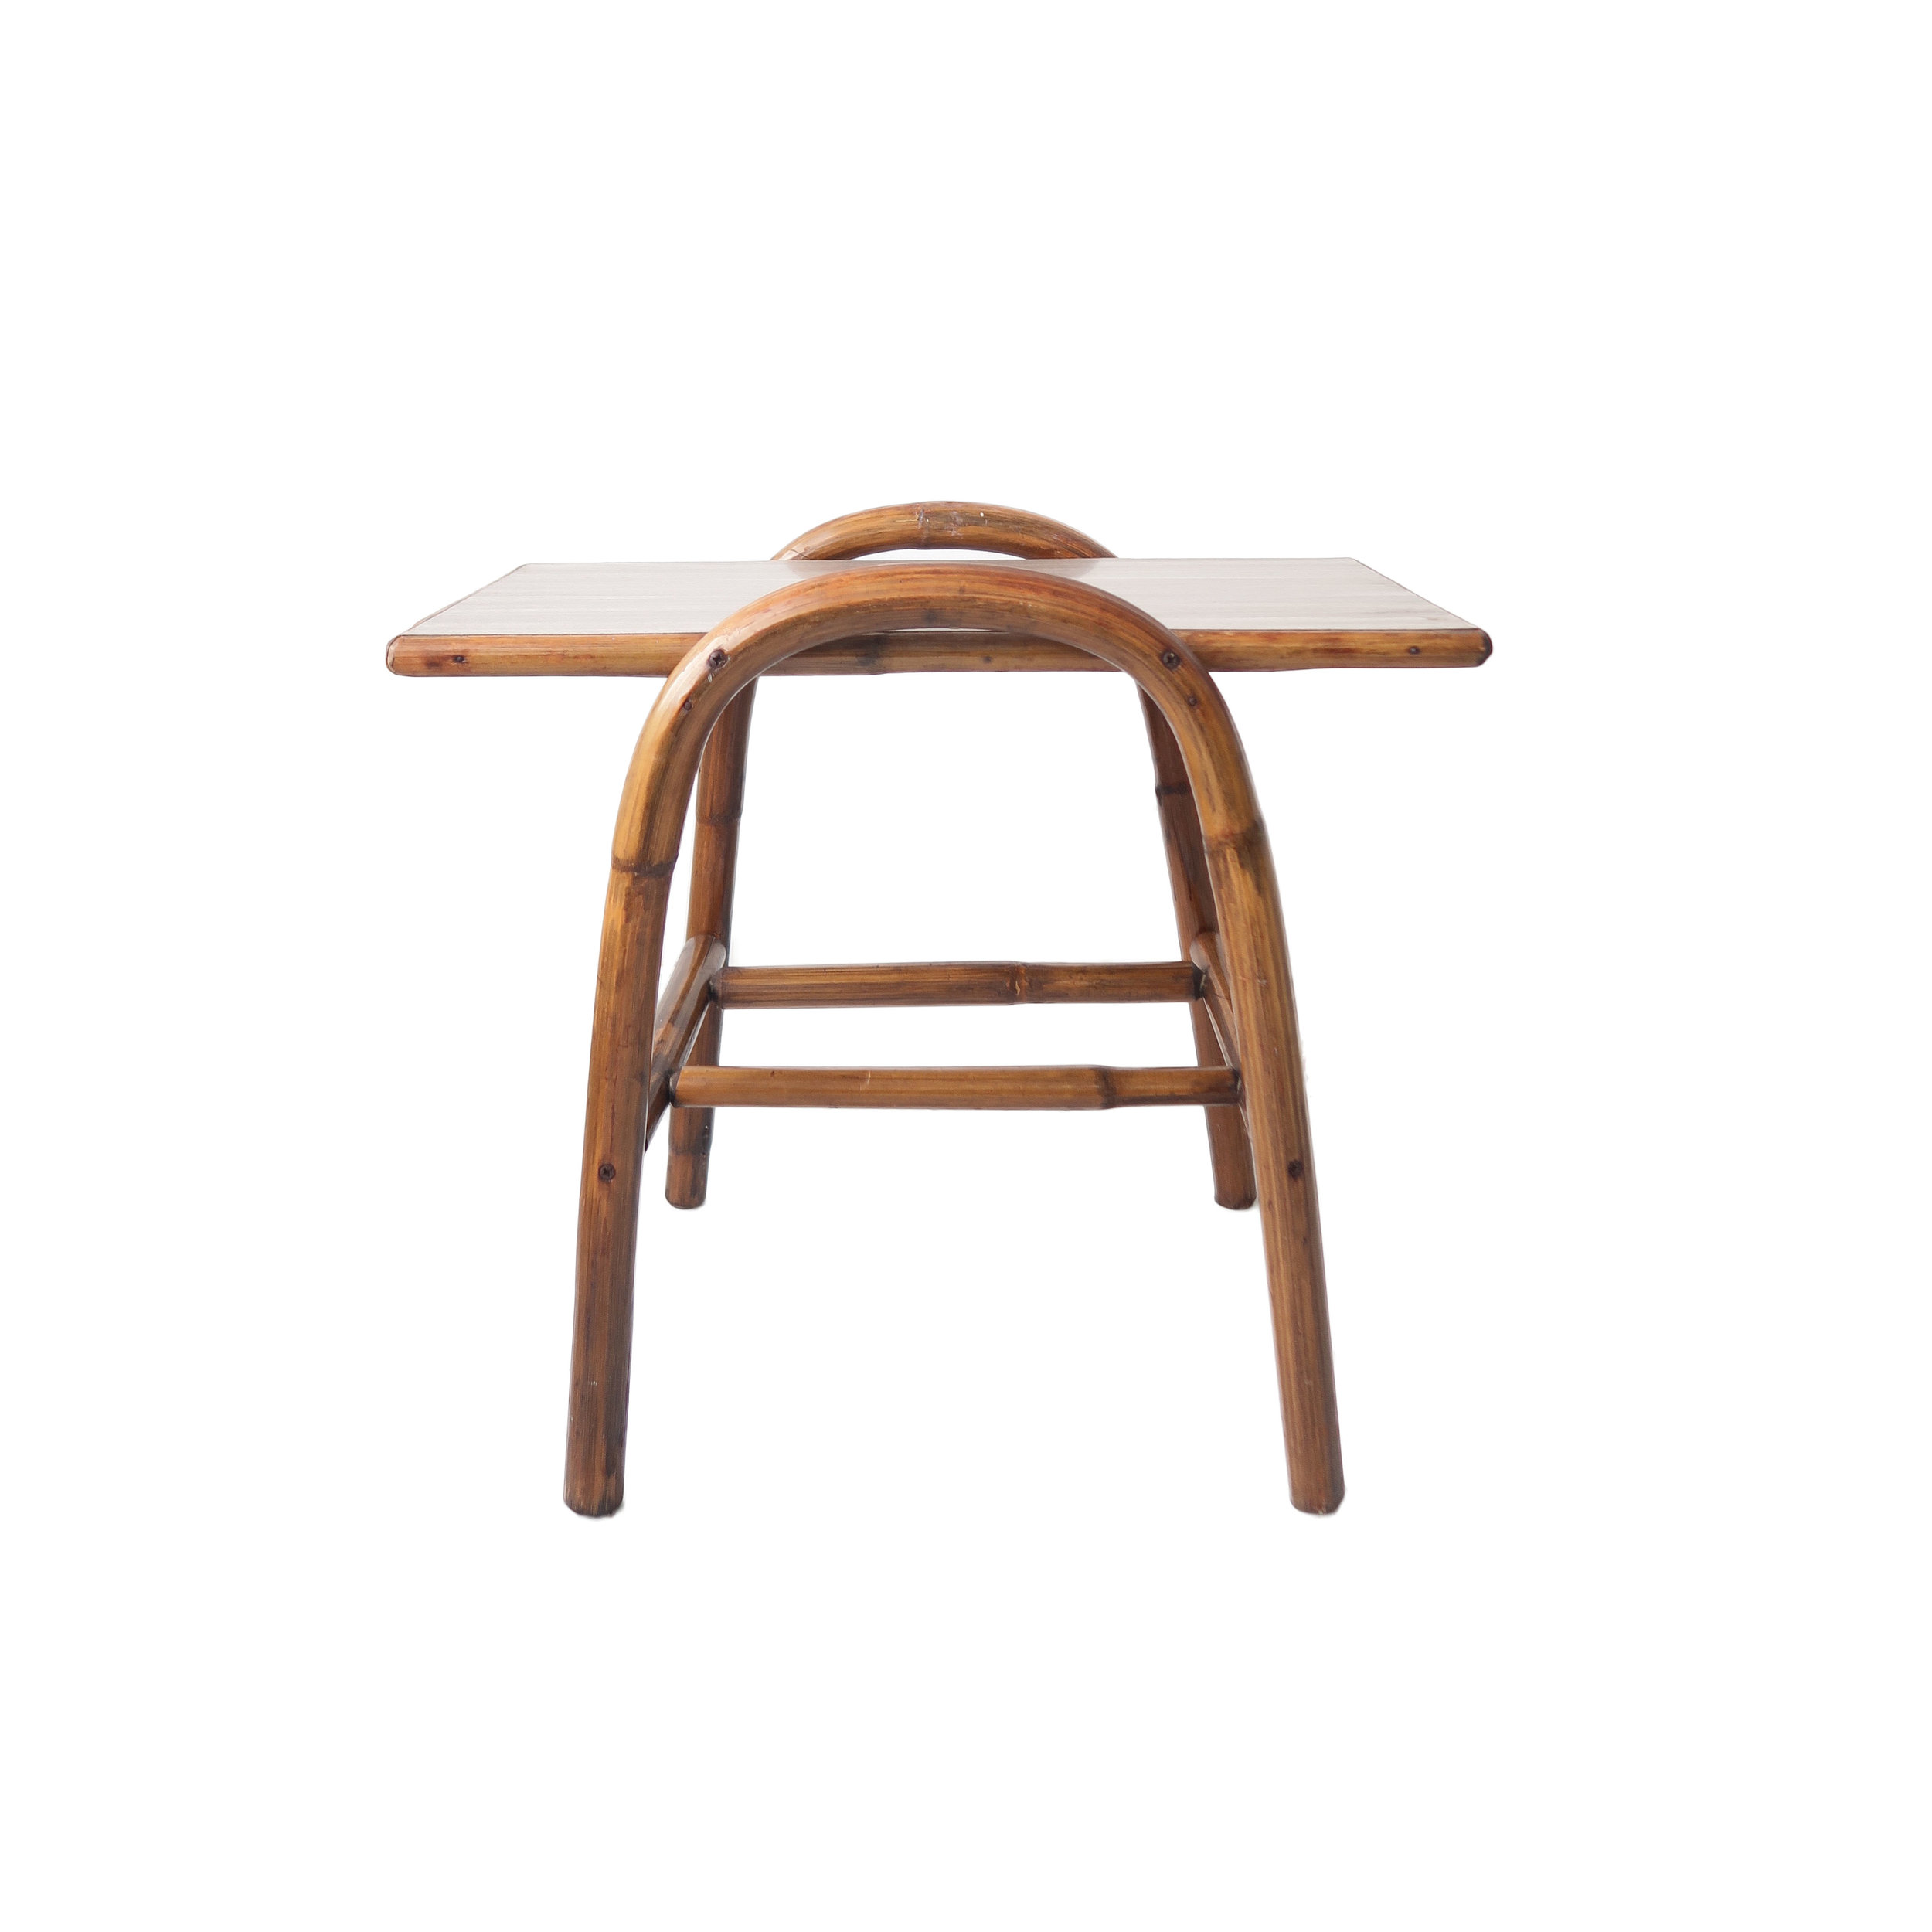 vintage bamboo table.jpg